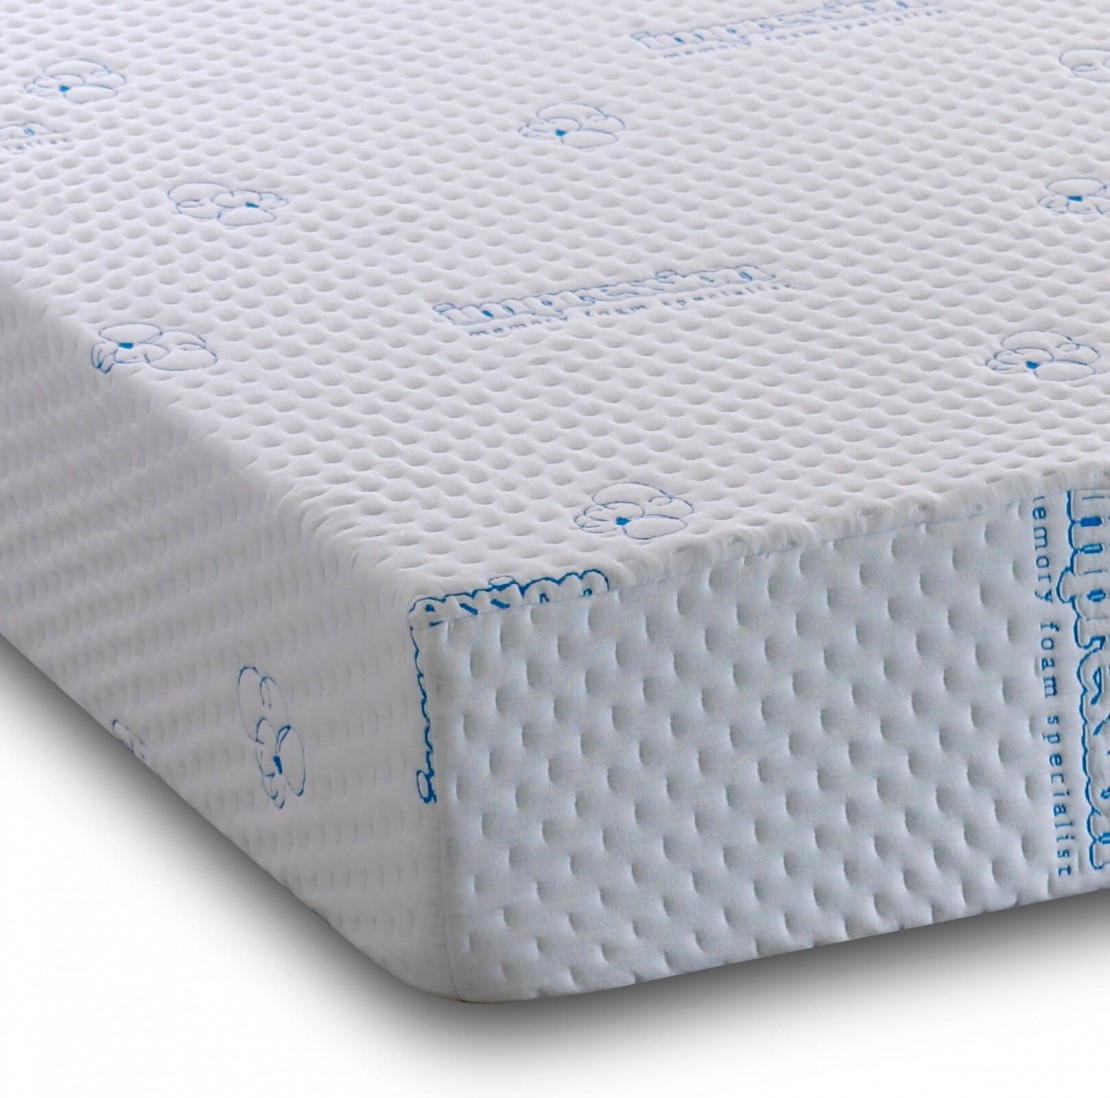 /_images/product-photos/visco-therapy-visco-2000-hd-memory-foam-regular-mattress-a.jpg